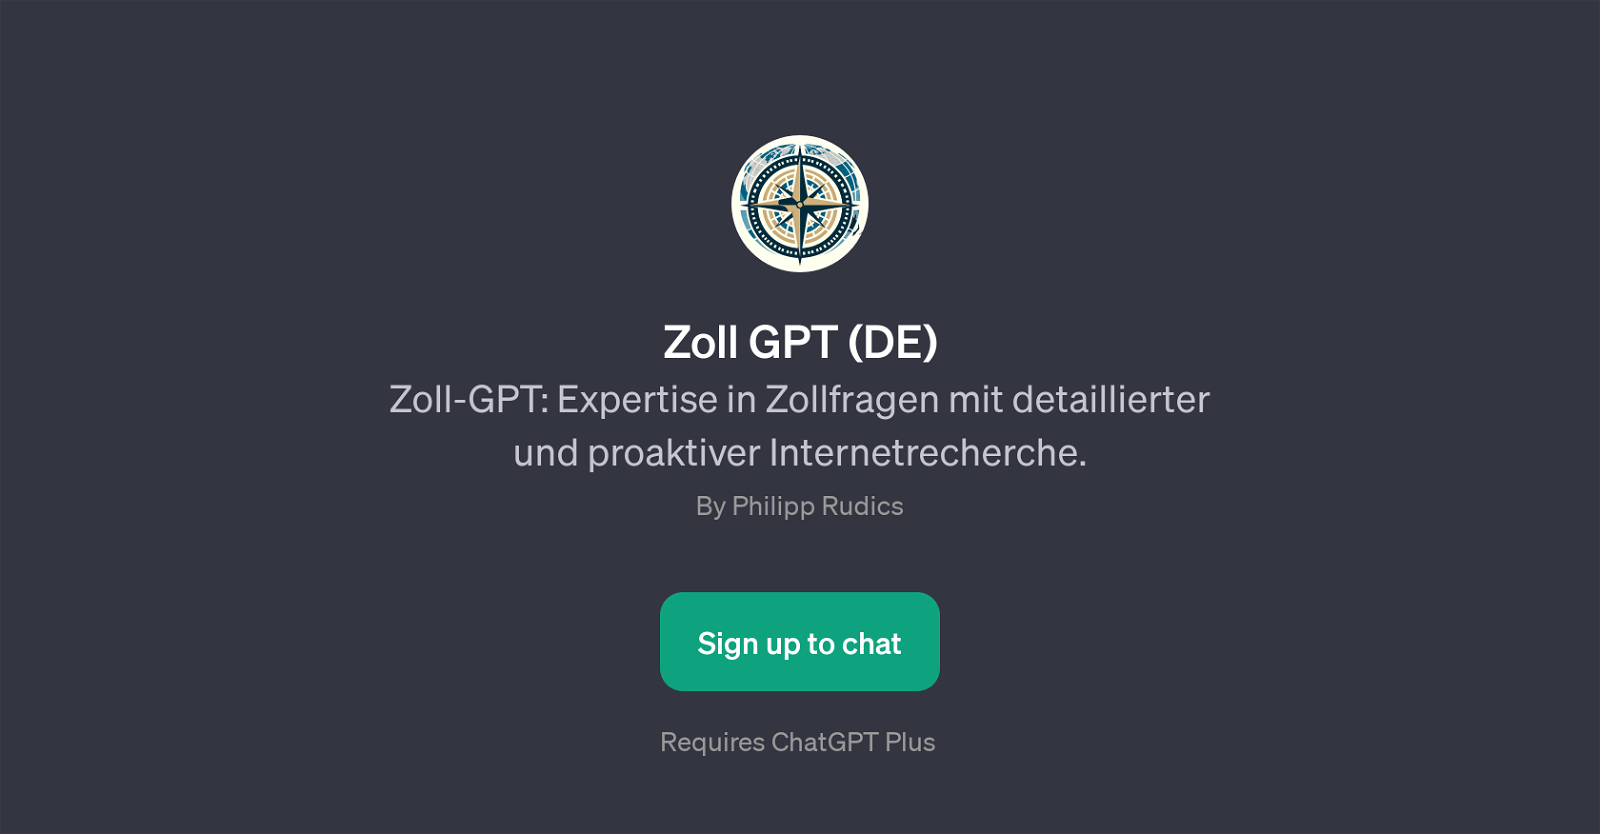 Zoll GPT (DE) website